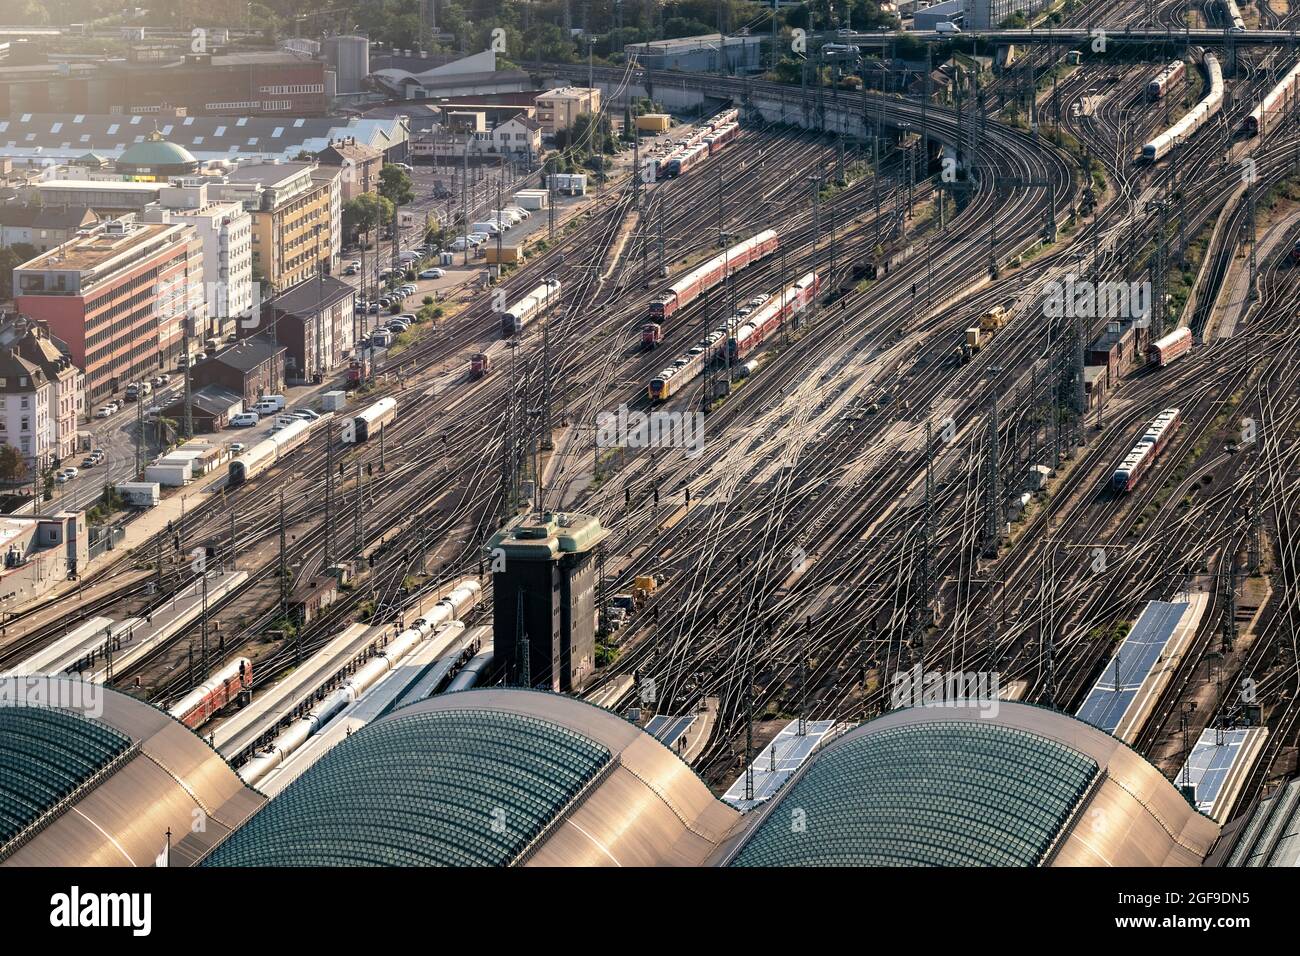 Aerial view of the Frankfurt central train station (Hauptbahnhof) at Franfurt Am Main. Germany - September 10, 2019 Stock Photo